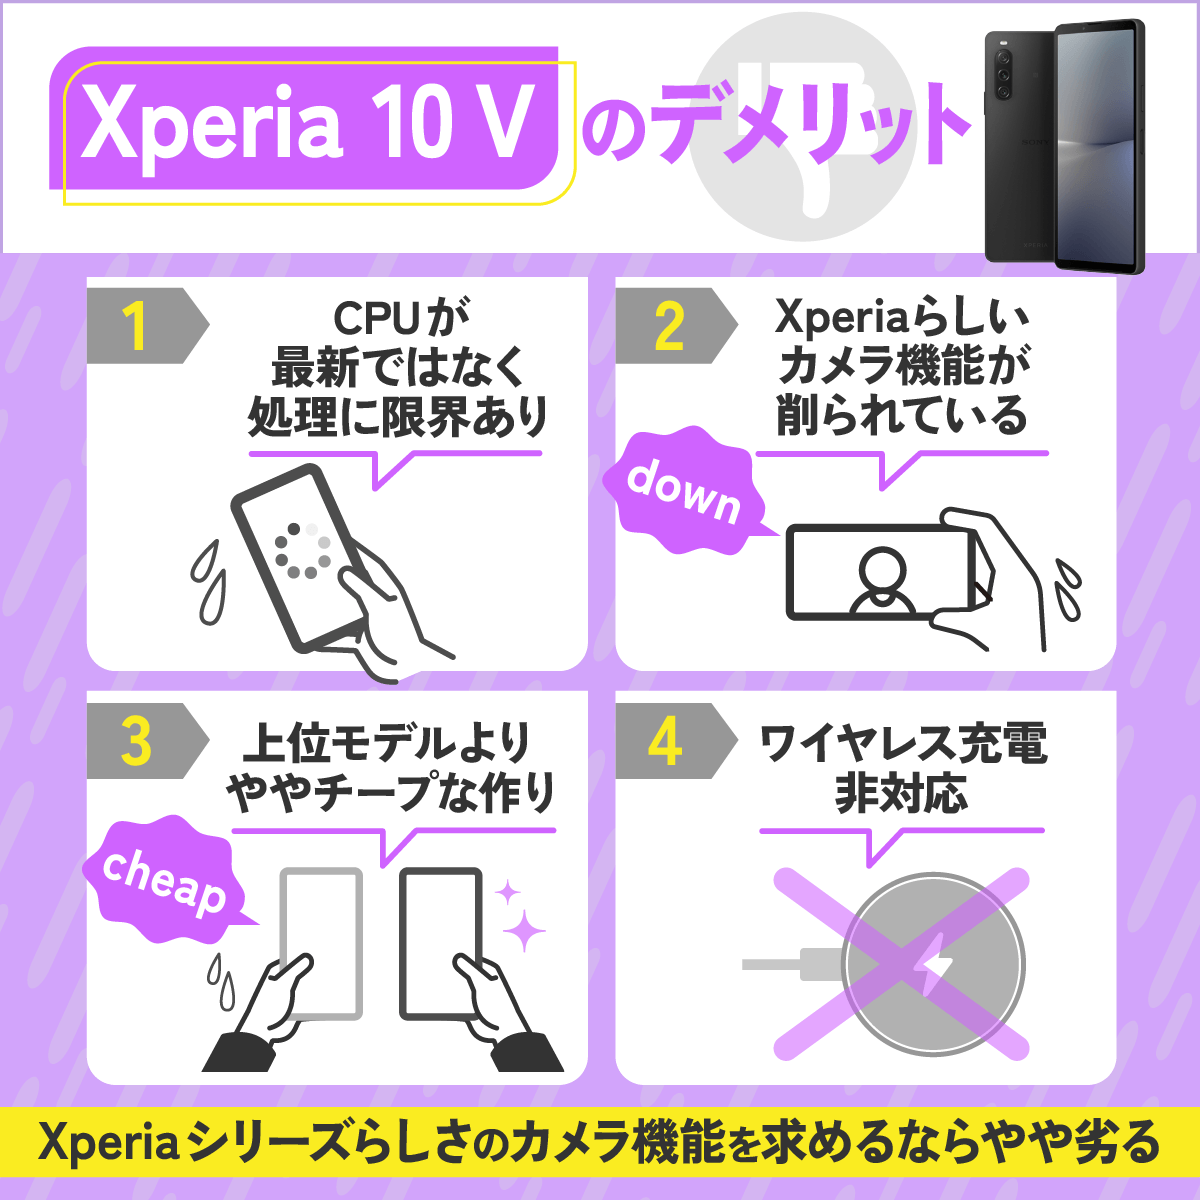 Xperia 10 Vのデメリット